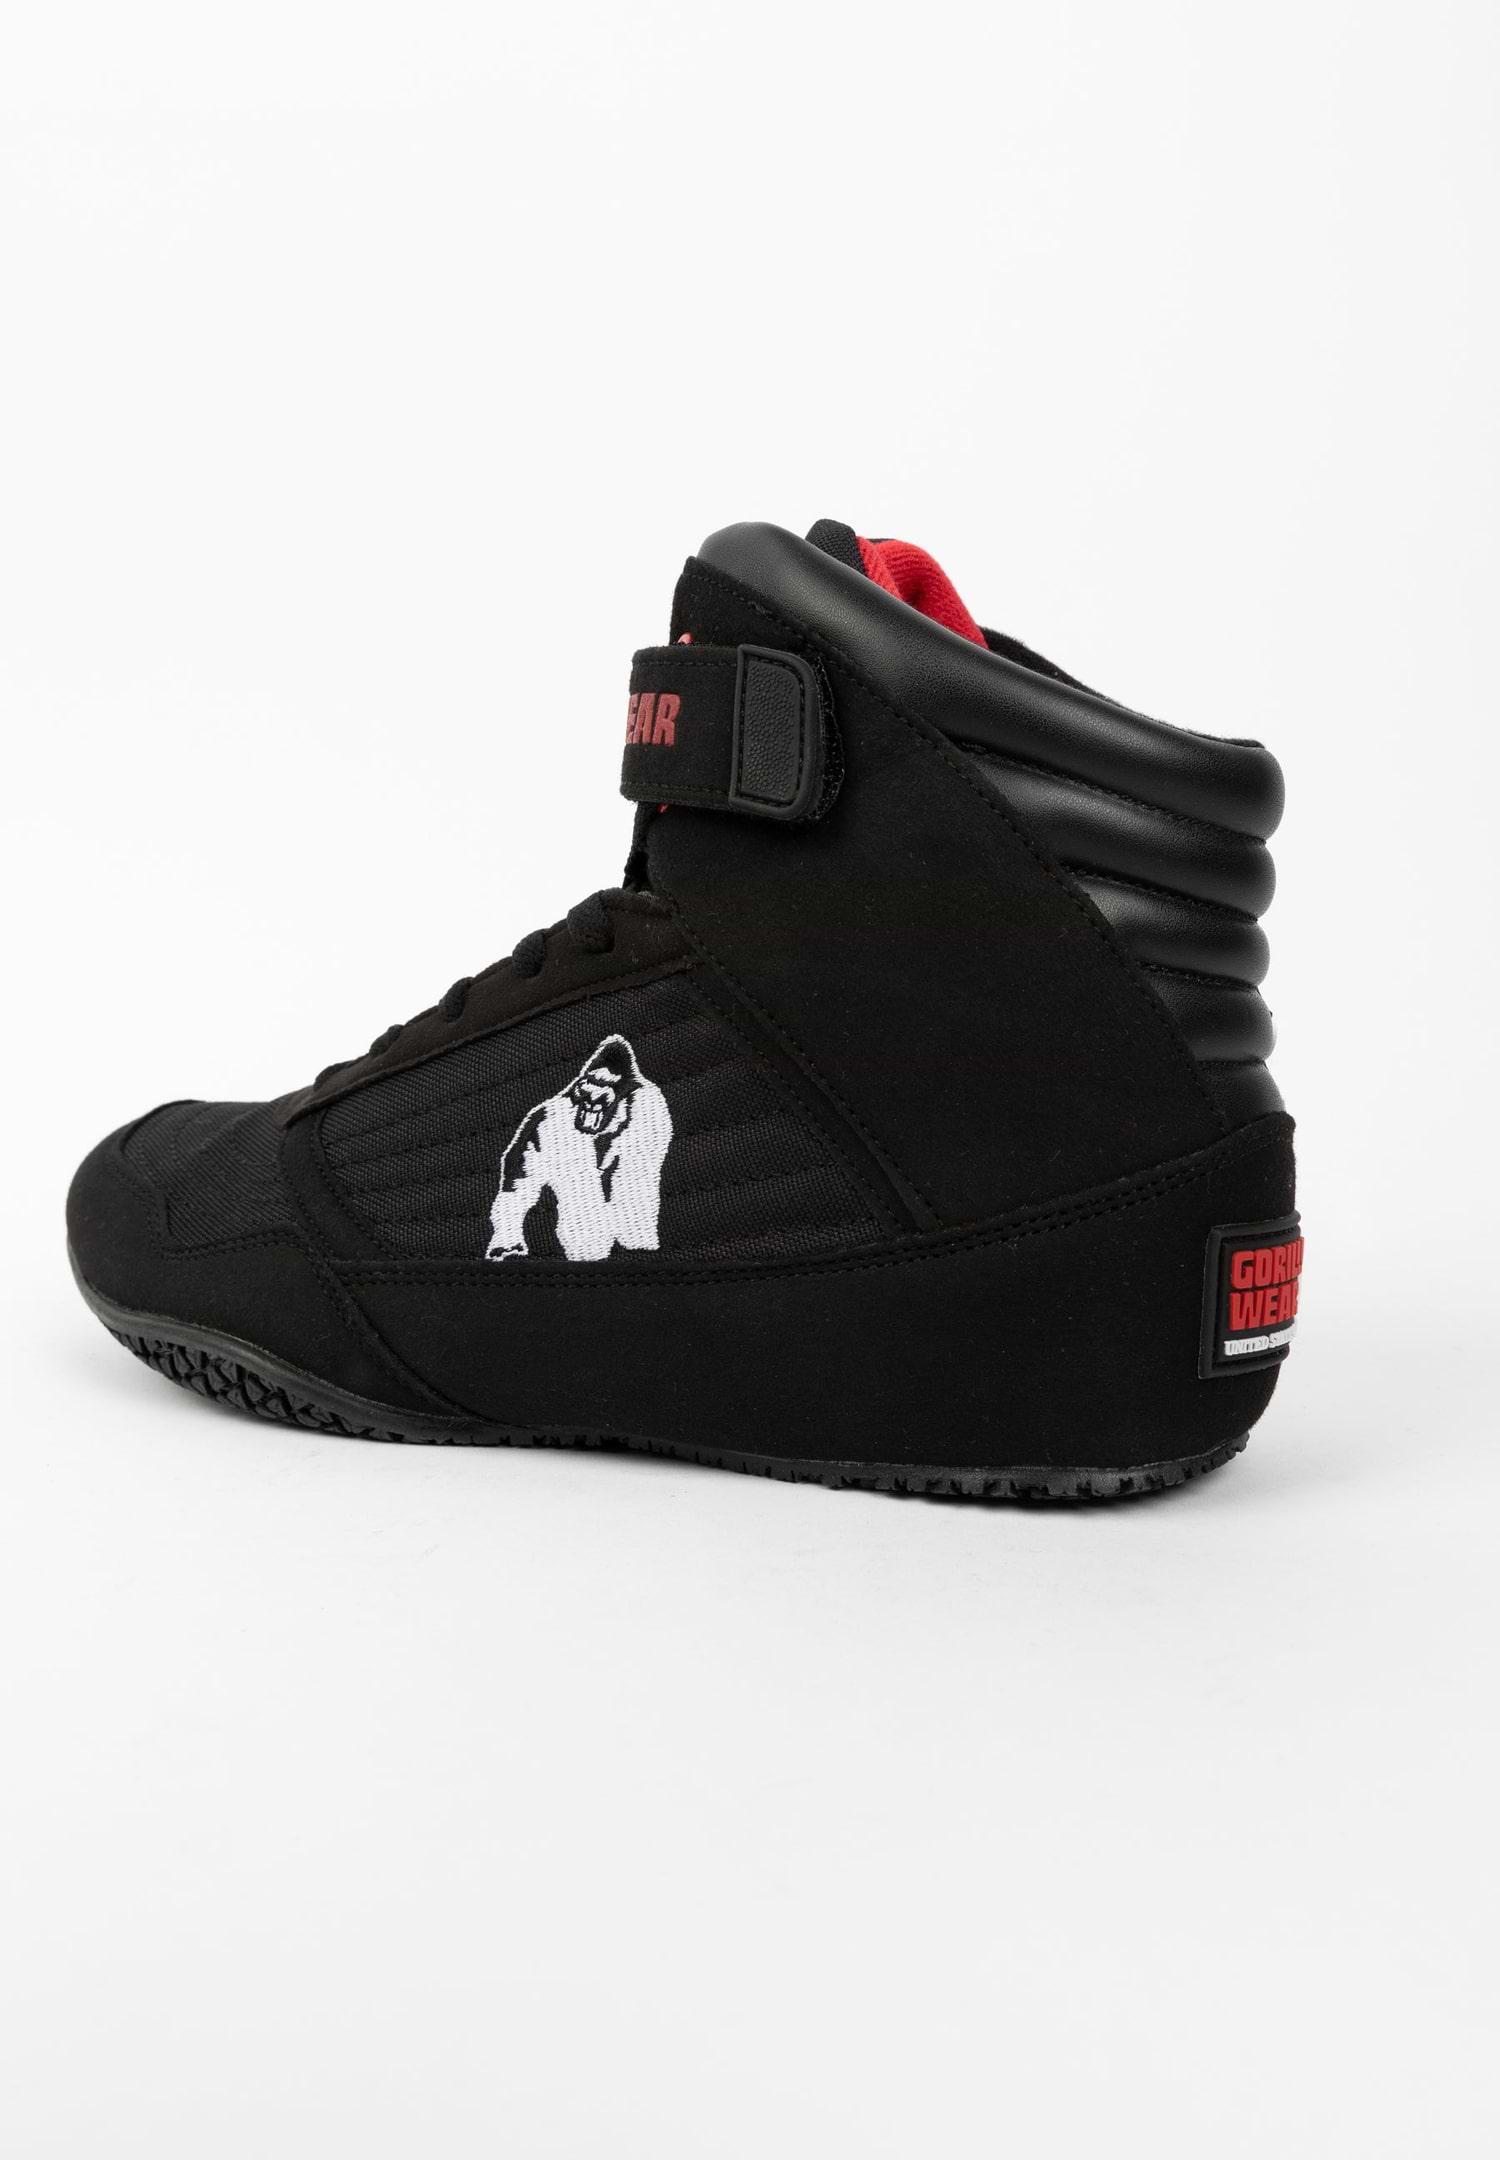 IQ/GORILLA WEAR Gorilla Wear HIGH TOPS - Weight Lifting Shoes - black -  Private Sport Shop